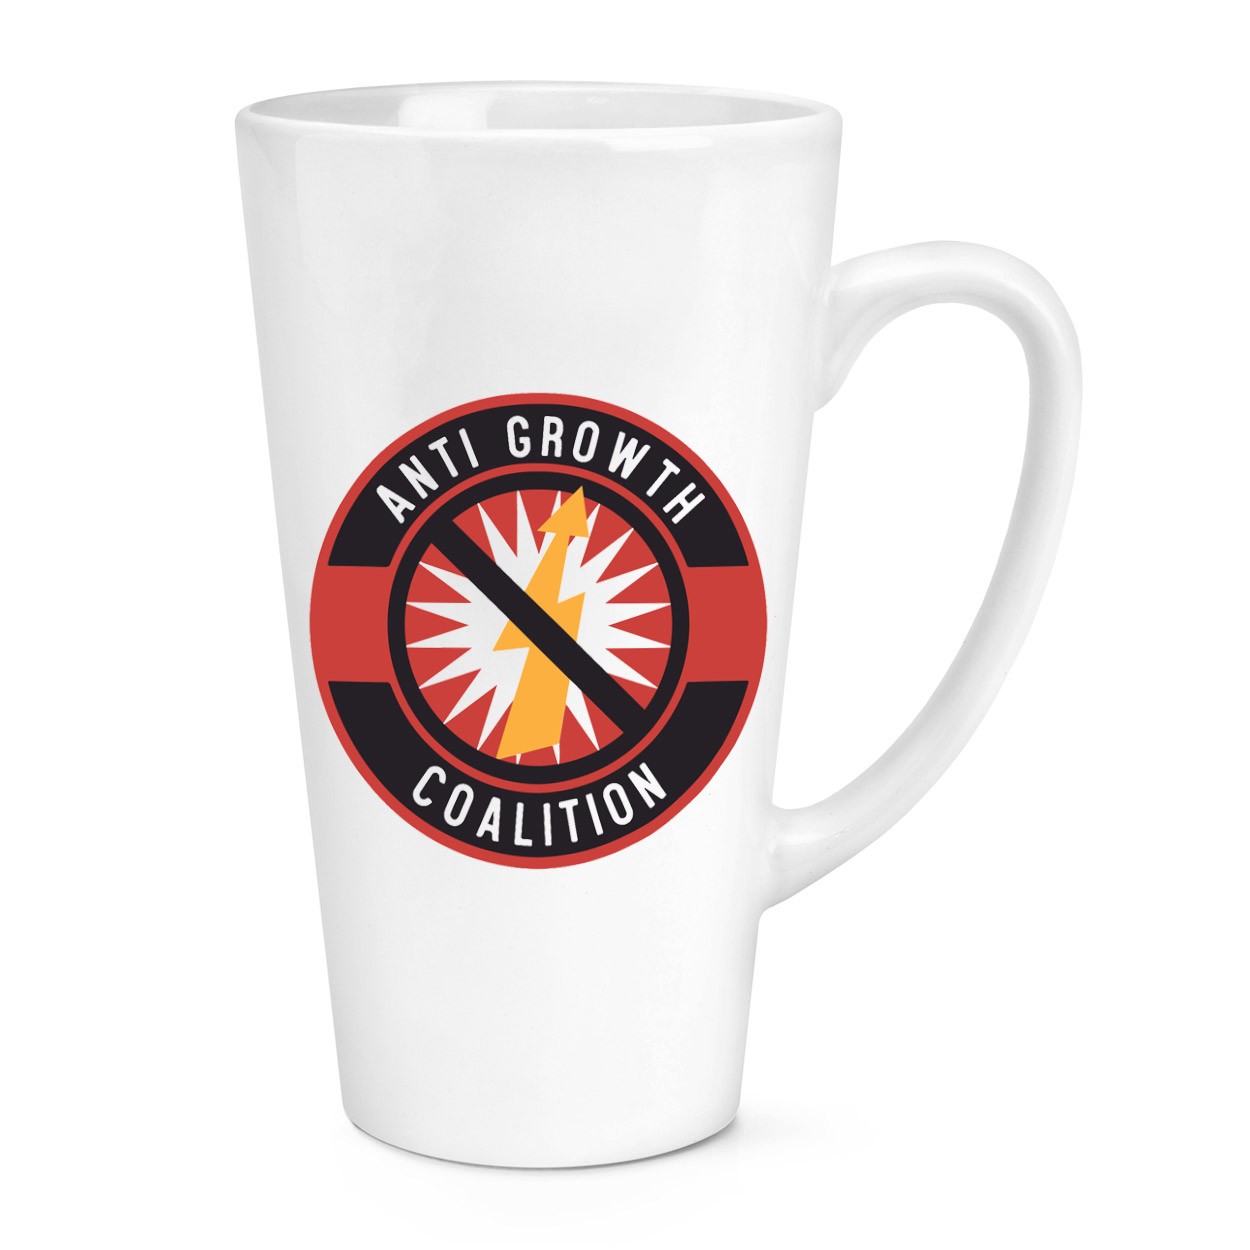 Anti Growth Coalition 17oz Large Latte Mug Cup